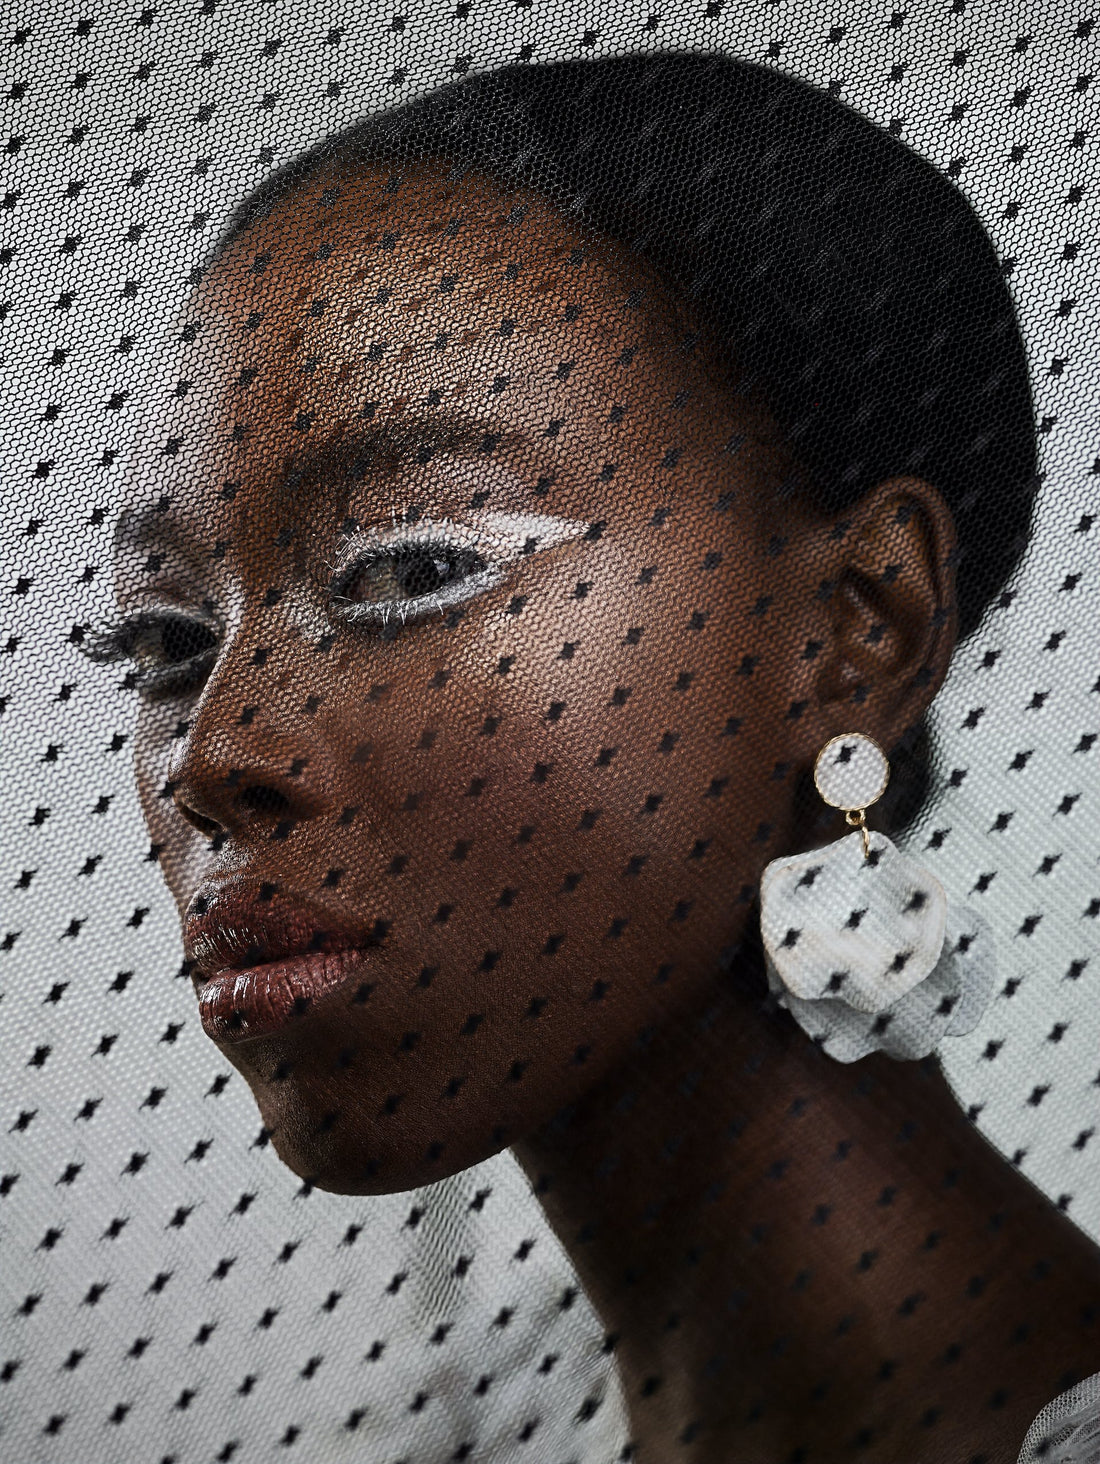 Afro-futurism in Fashion